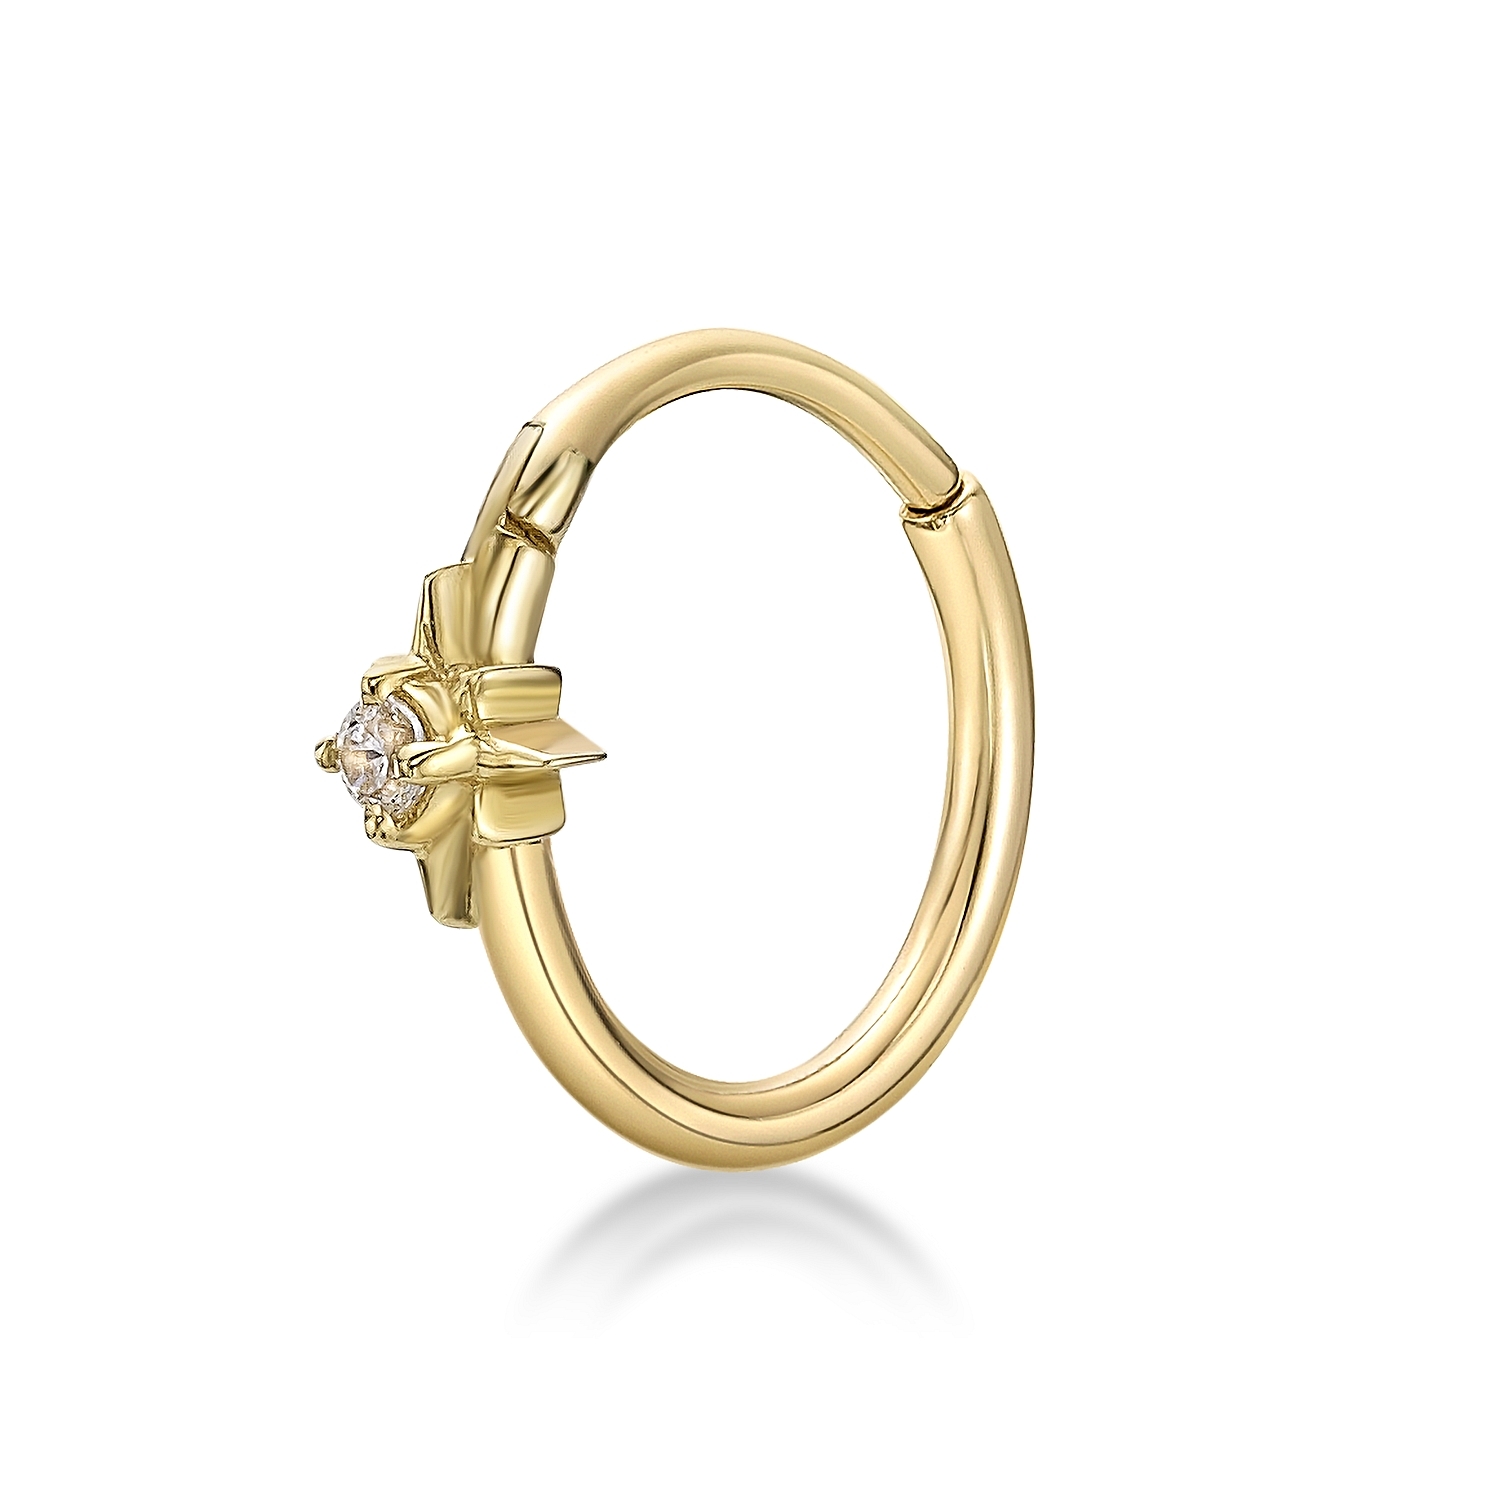 Lavari Jewelers Women's 10 MM Star Hoop Nose Ring with Multi-Purpose Clicker, 14K Yellow Gold, 2 MM Cubic Zirconia, 20 Gauge